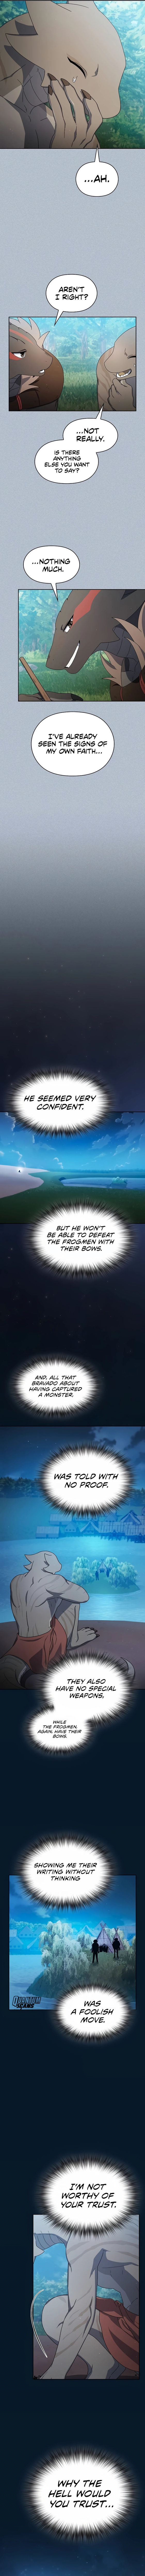 The Nebula’s Civilization - Chapter 18 Page 6